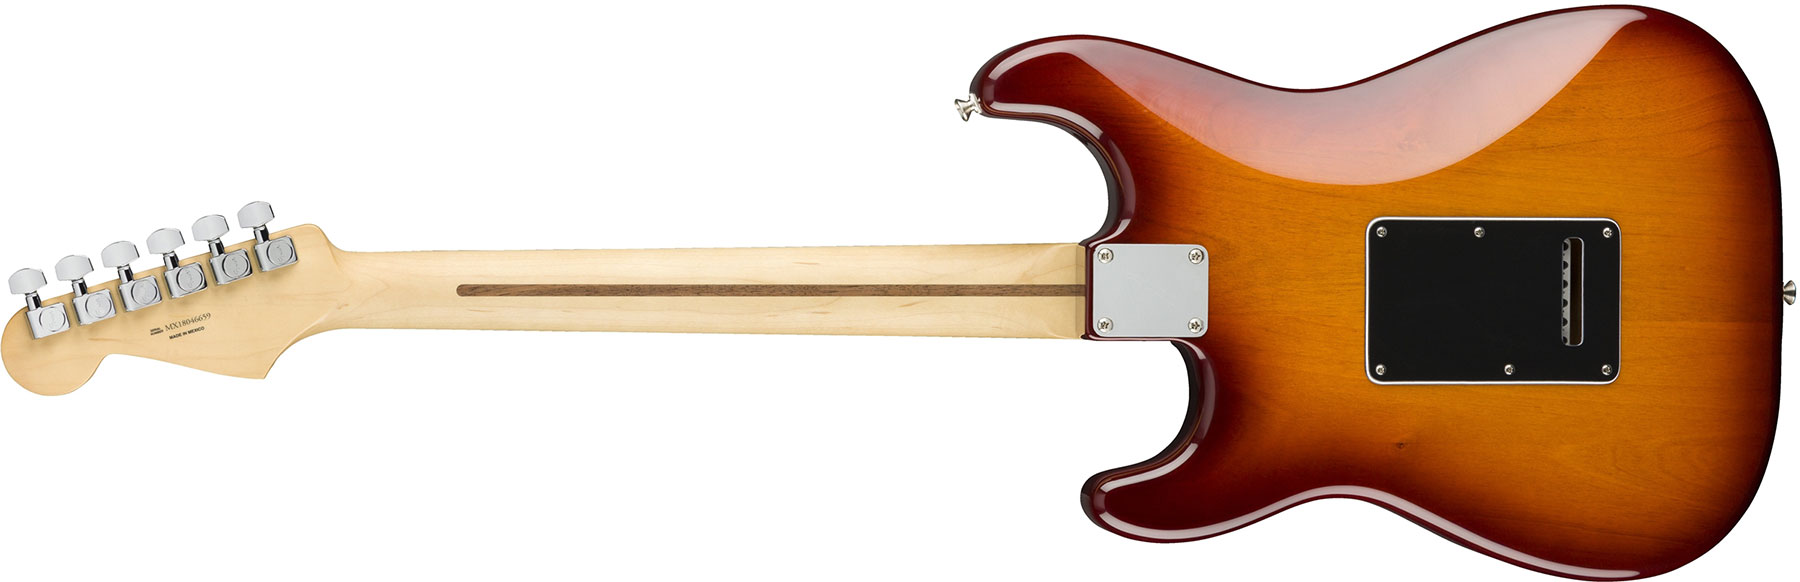 Fender Strat Player Mex Hsh Pf - Tobacco Burst - Guitarra eléctrica con forma de str. - Variation 1